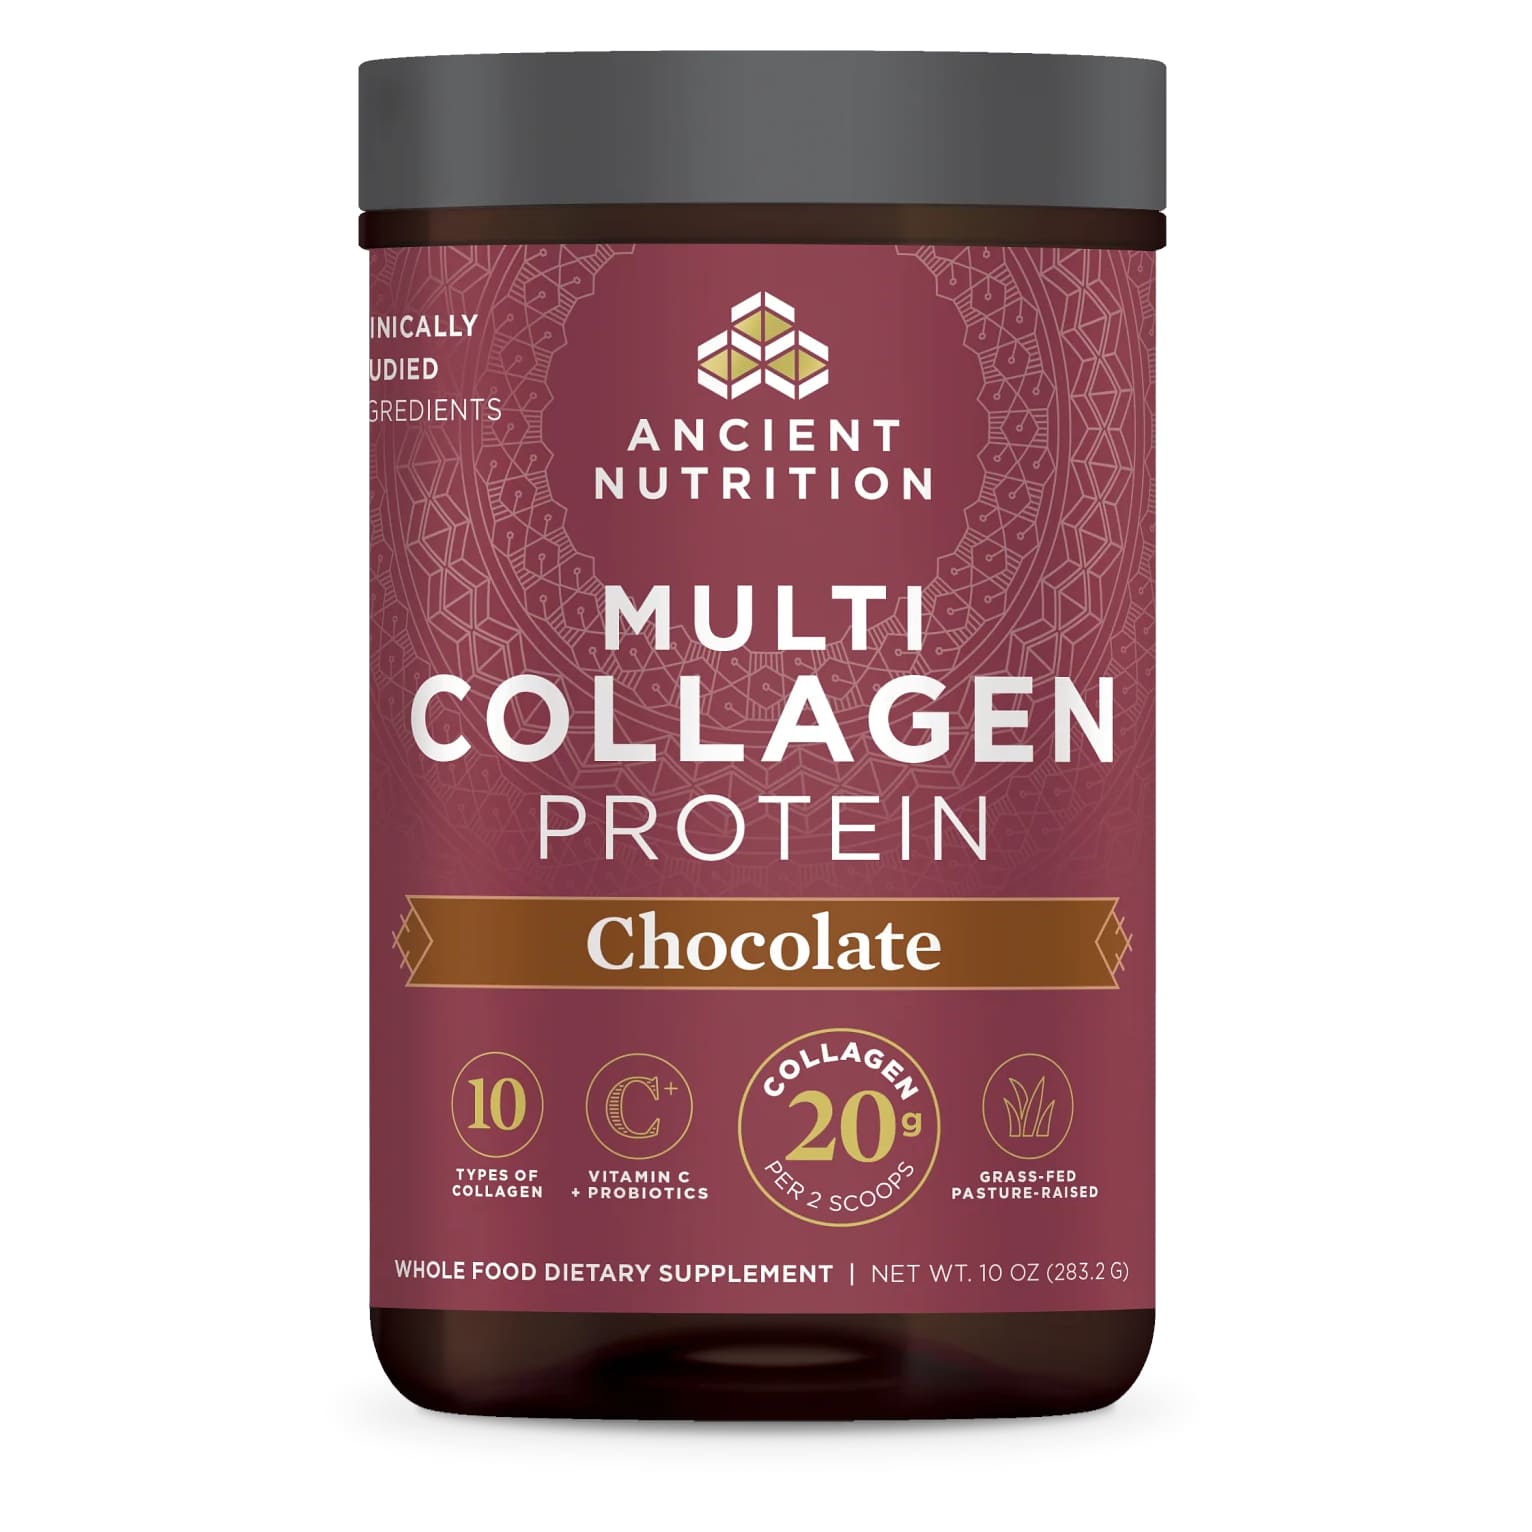 Коллаген Ancient Nutrition Multi Protein 10 Types Vitamin C + Probiotics Chocolate, 283,2 г коллаген horbaach multi protein 908 гр